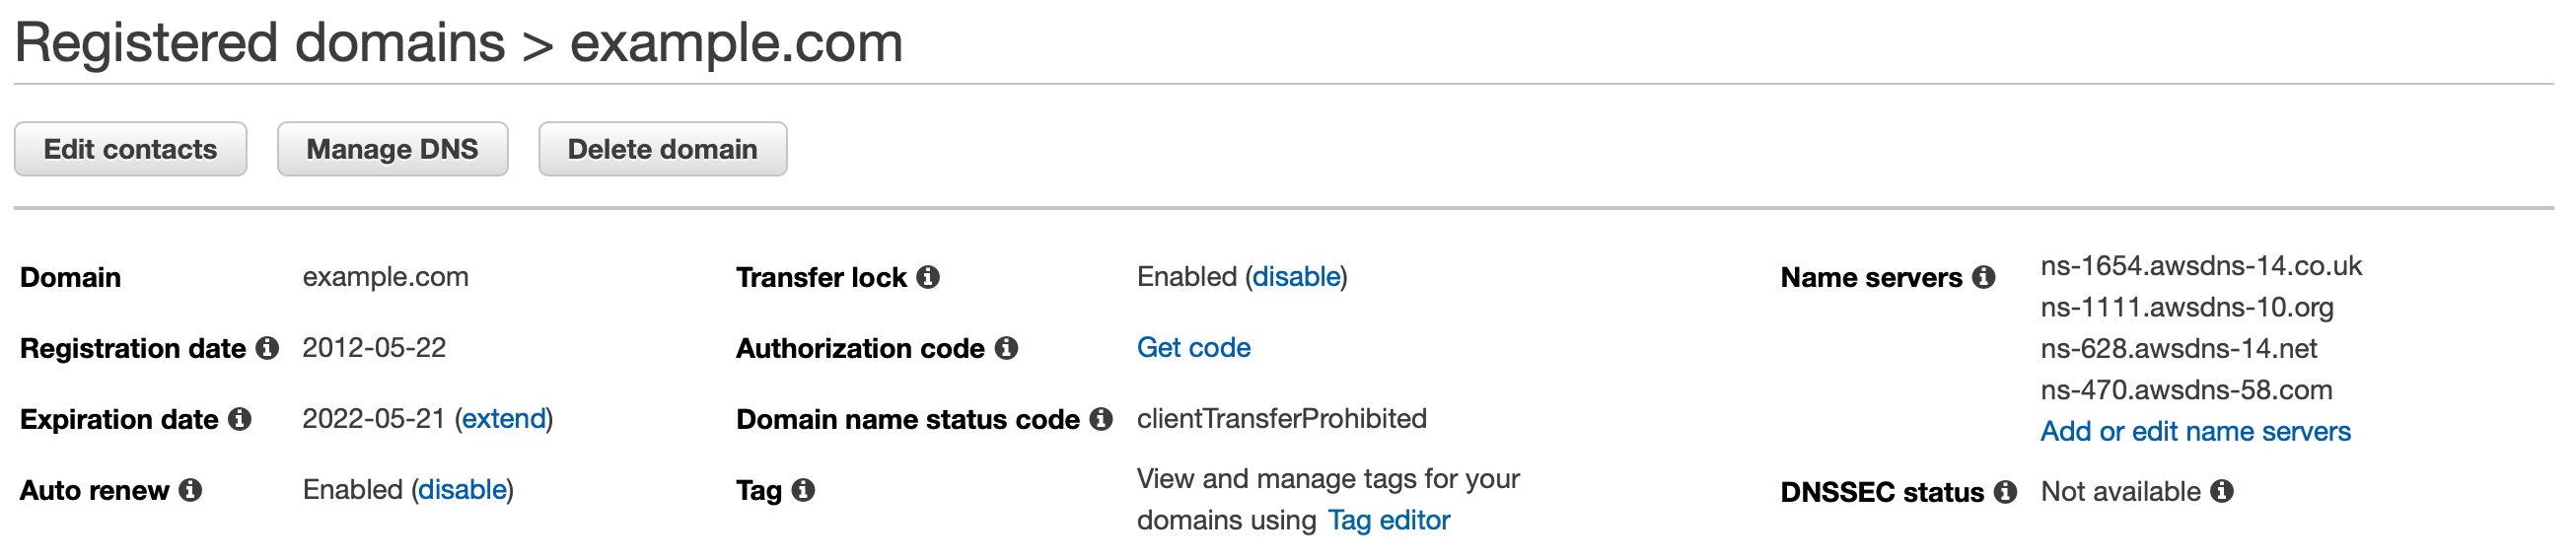 Registered domain example.com